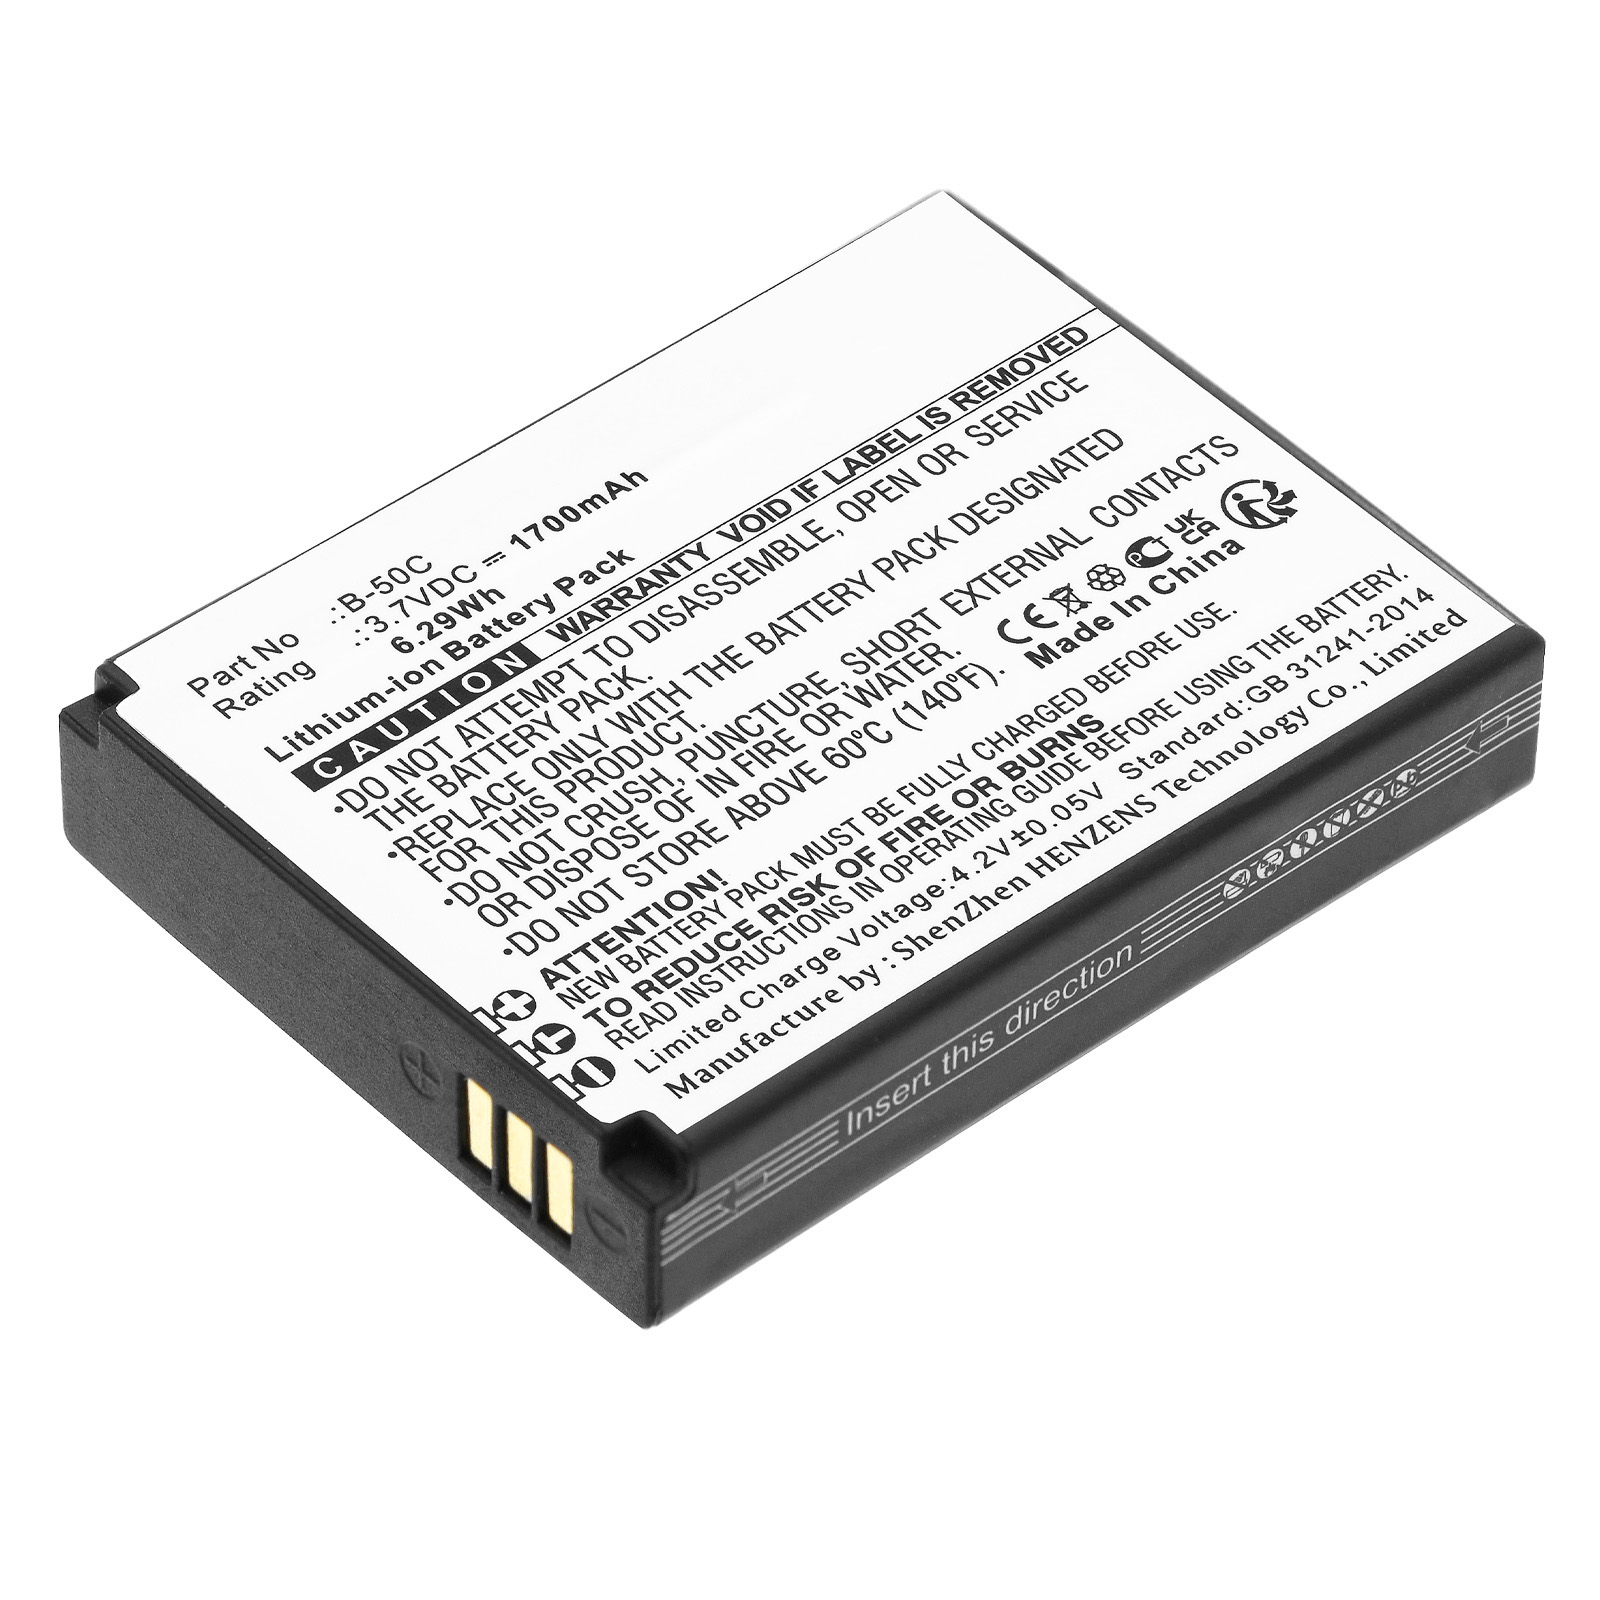 Synergy Digital 2-Way Radio Battery, Compatible with Inrico B-50C 2-Way Radio Battery (Li-ion, 3.7V, 1700mAh)